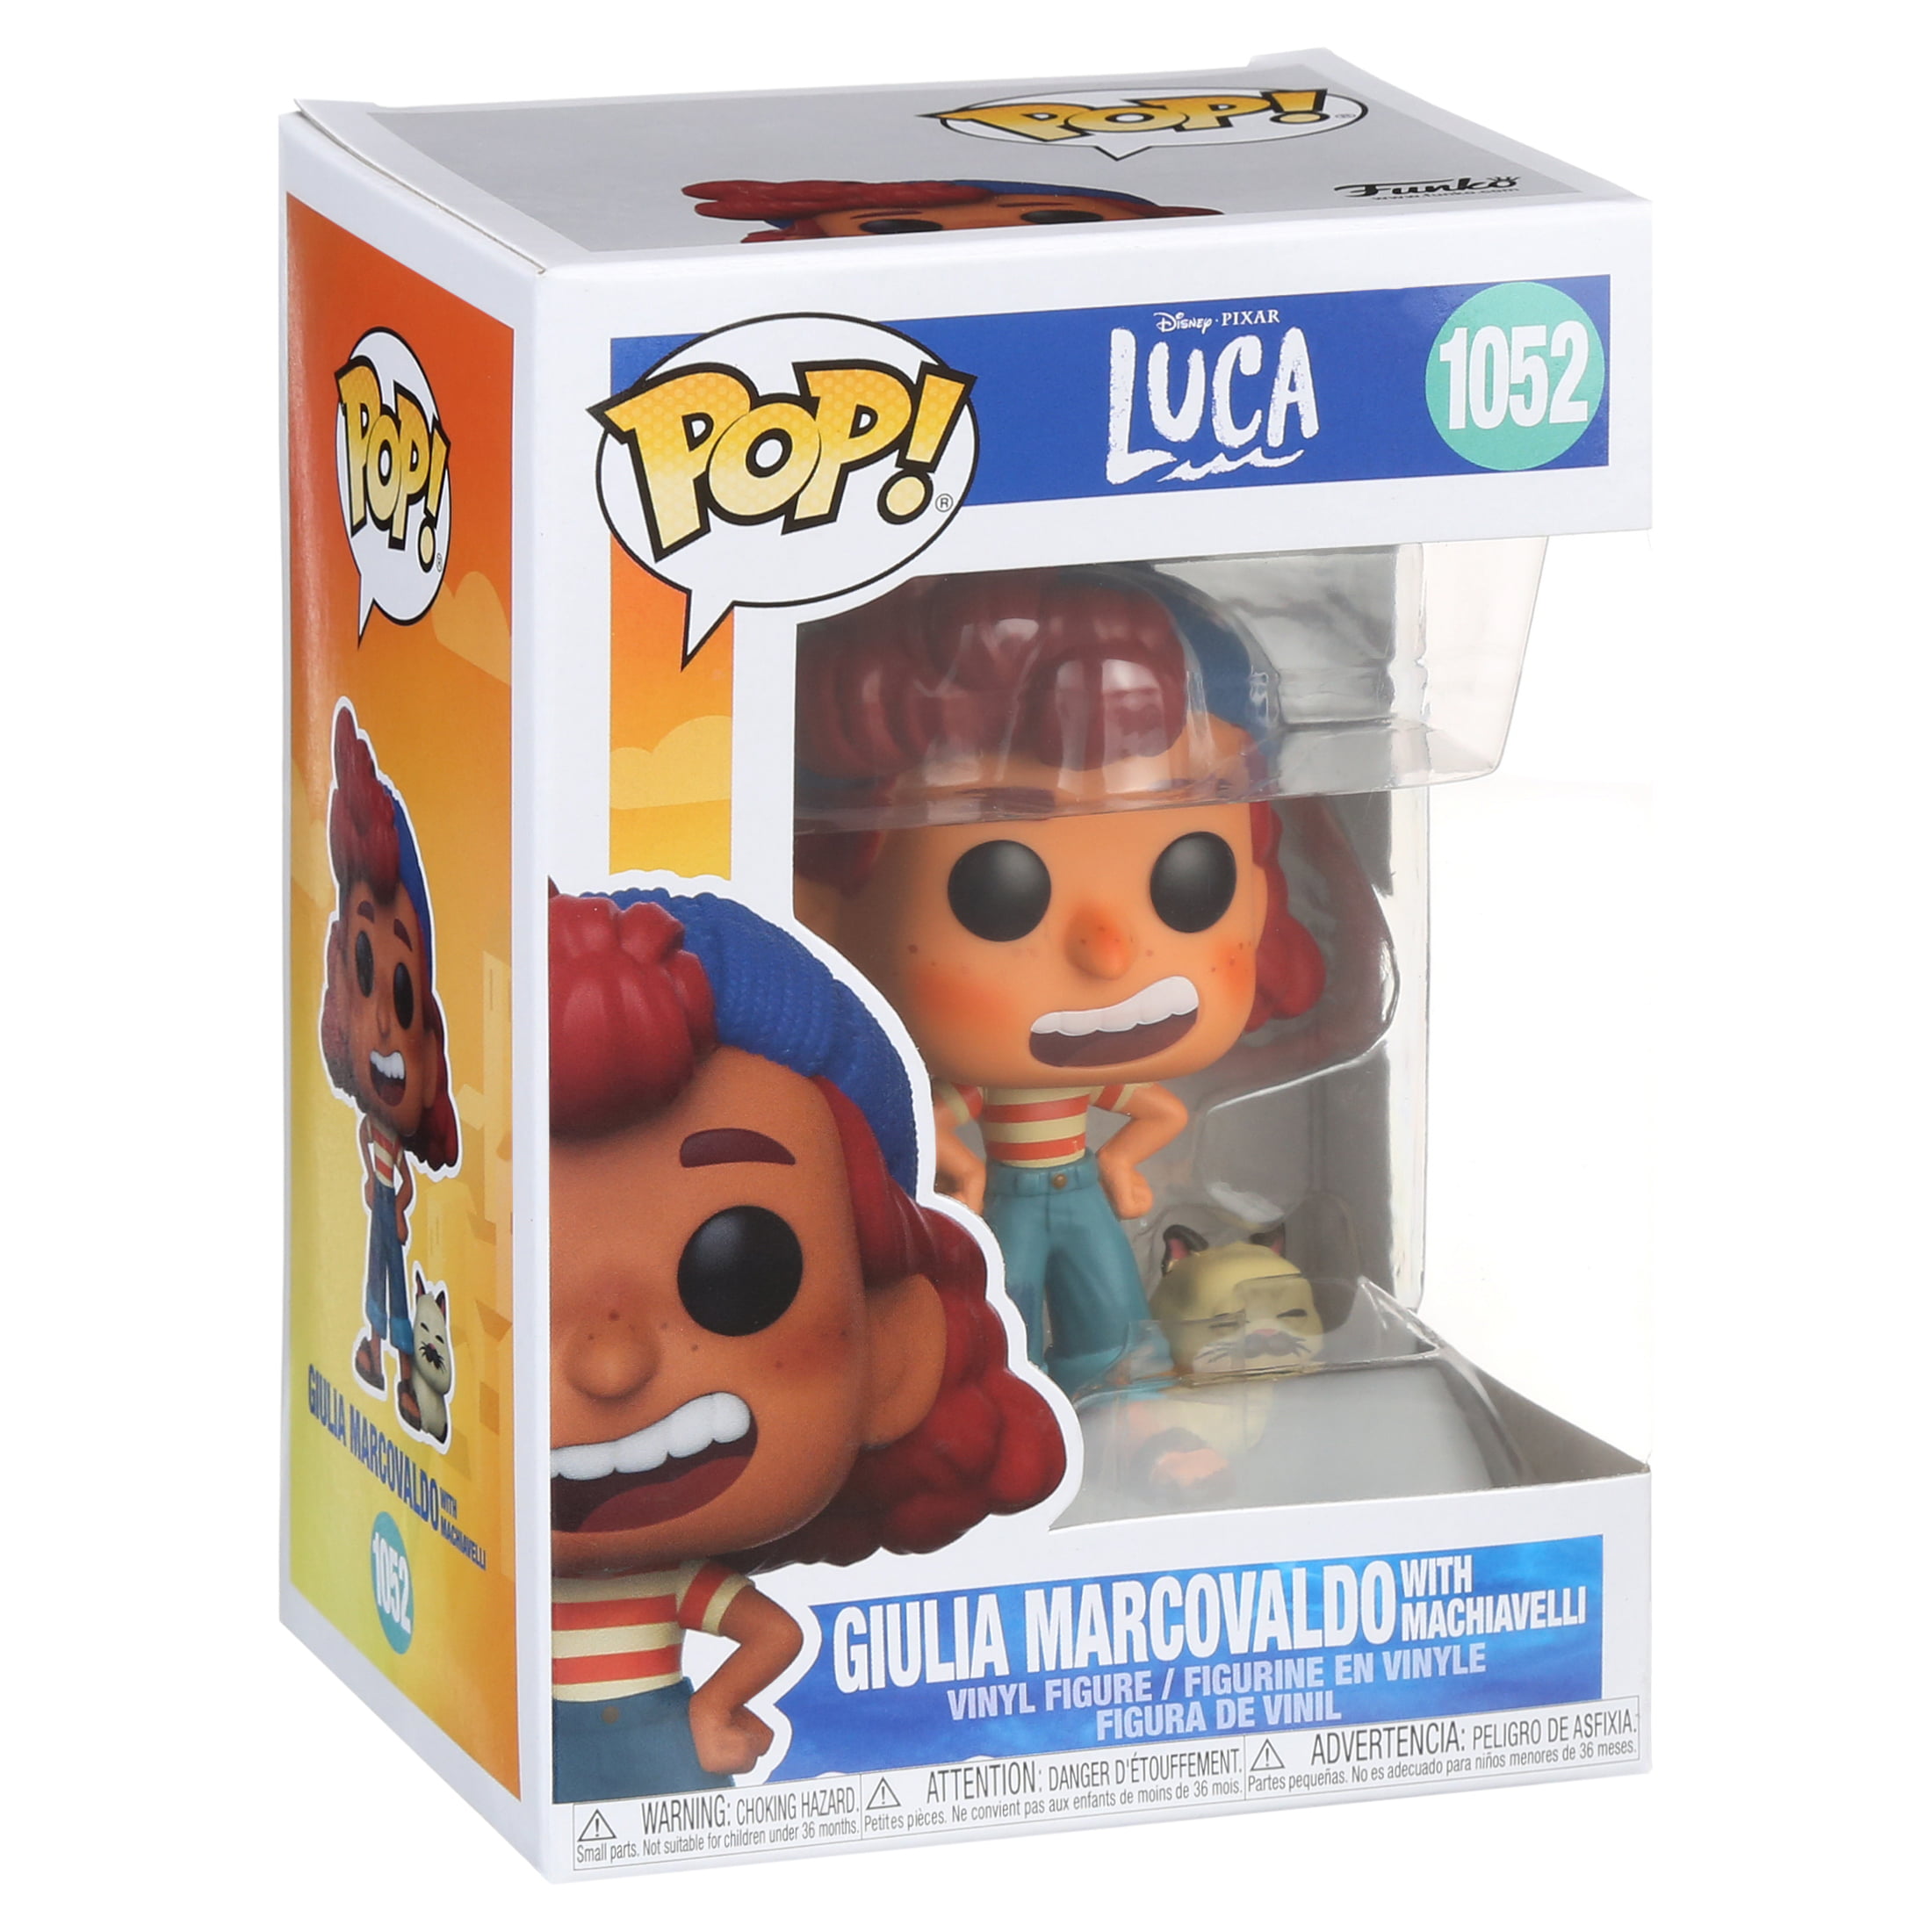 *****Funko Pop! Disney: Luca – Luca (Human) Vinyl Figure, 3.75 inches*****